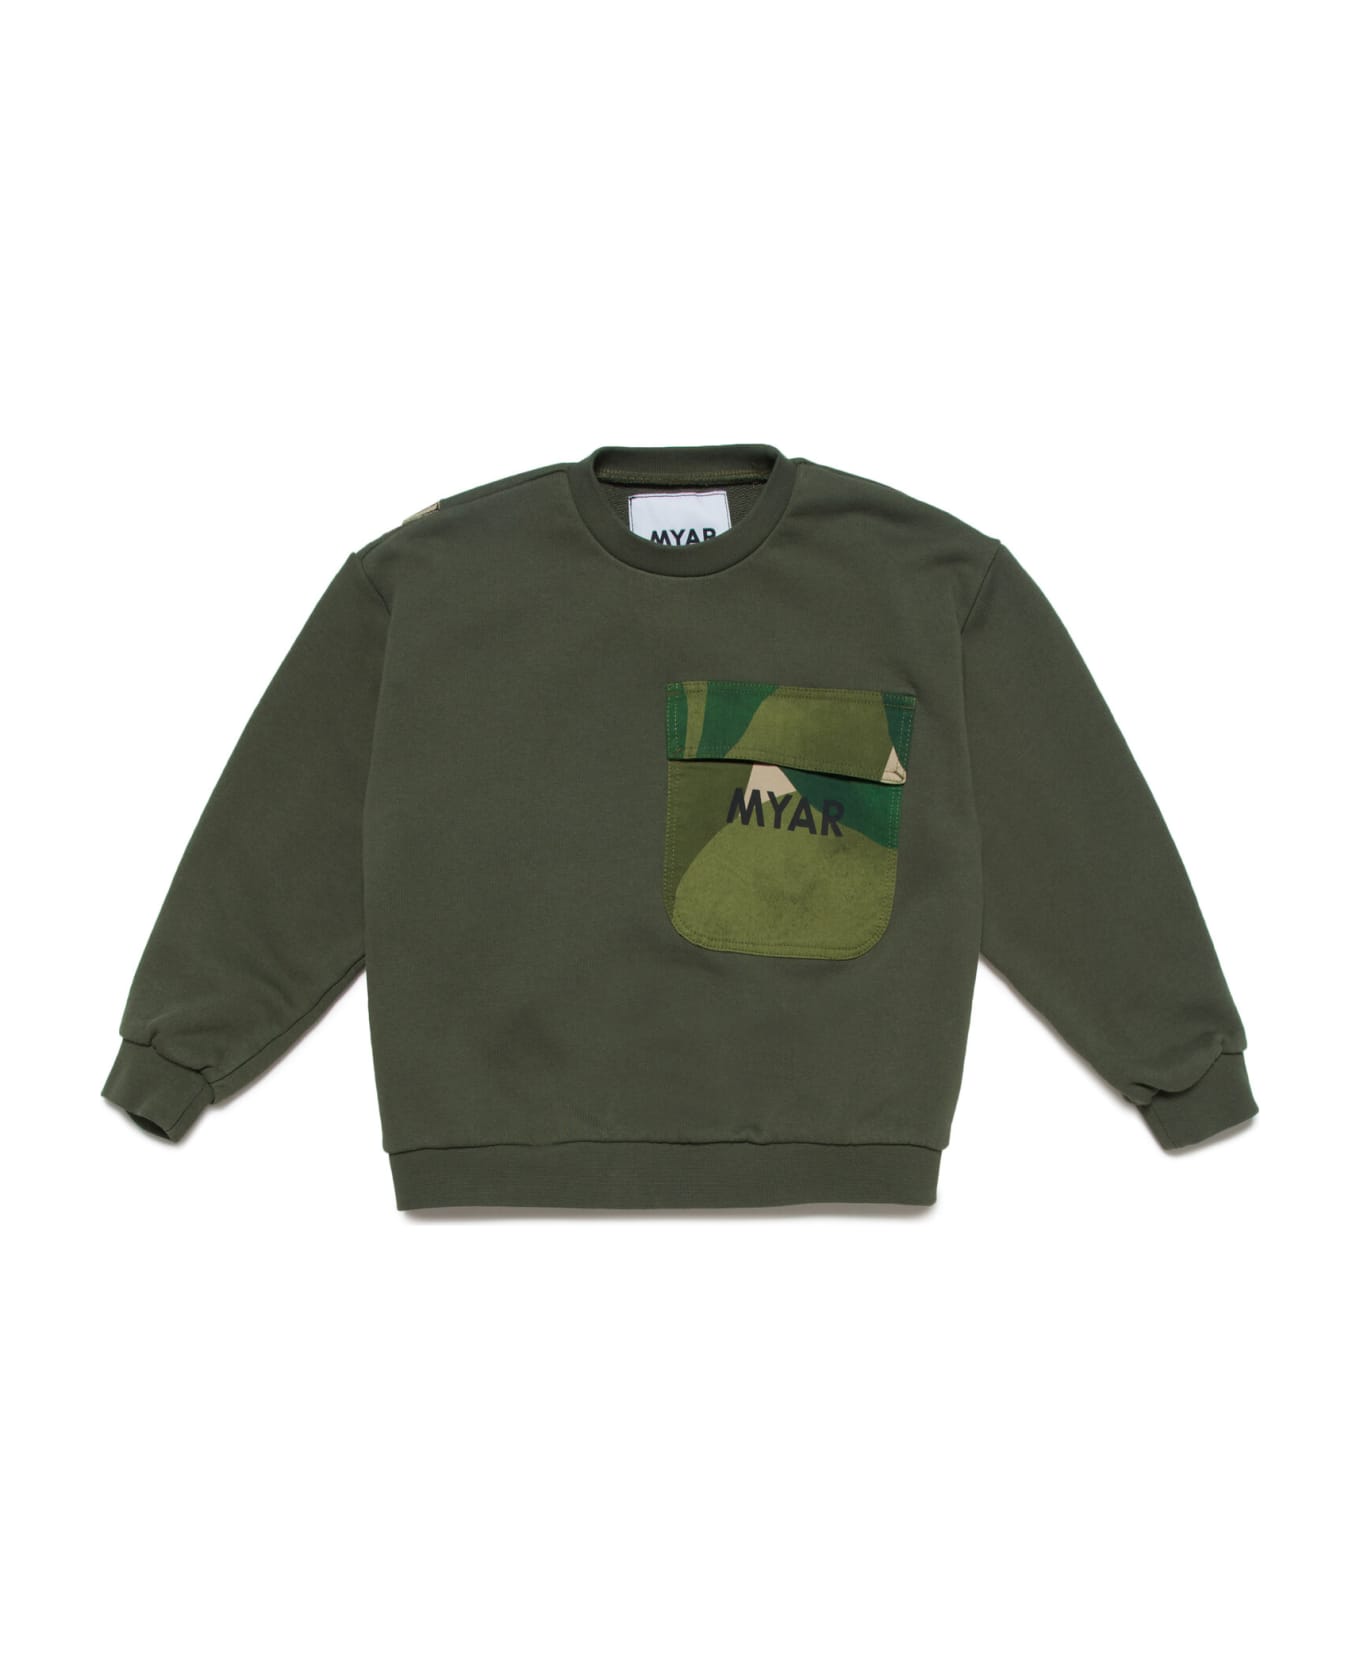 MYAR Mys20u Sweat-shirt Myar Sweatshirt With Pocket And Appliqués Fabric Deadstock Rainforest Pattern - Army green